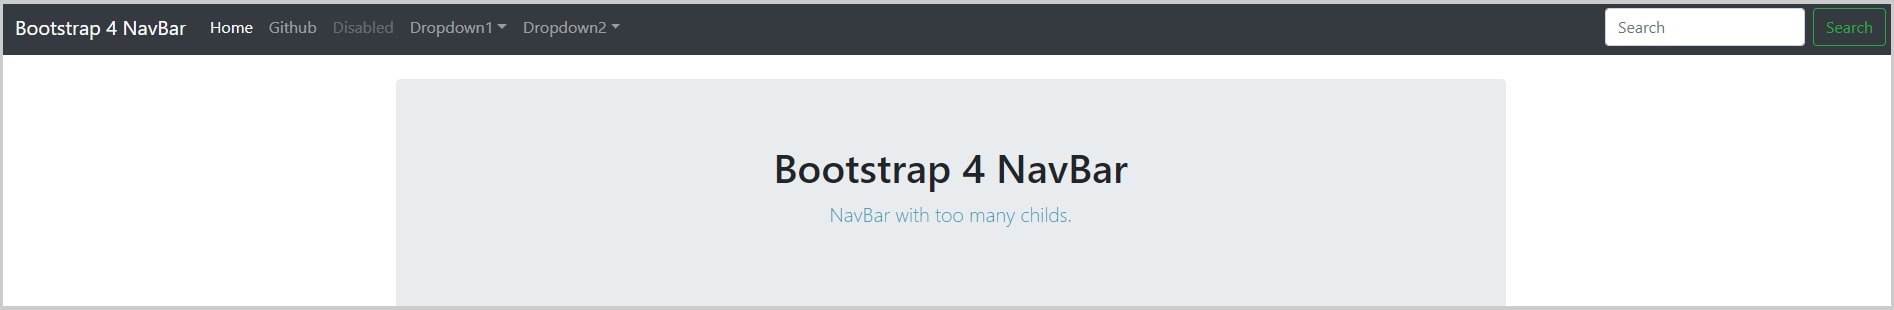 bootstrap navbar responsive template